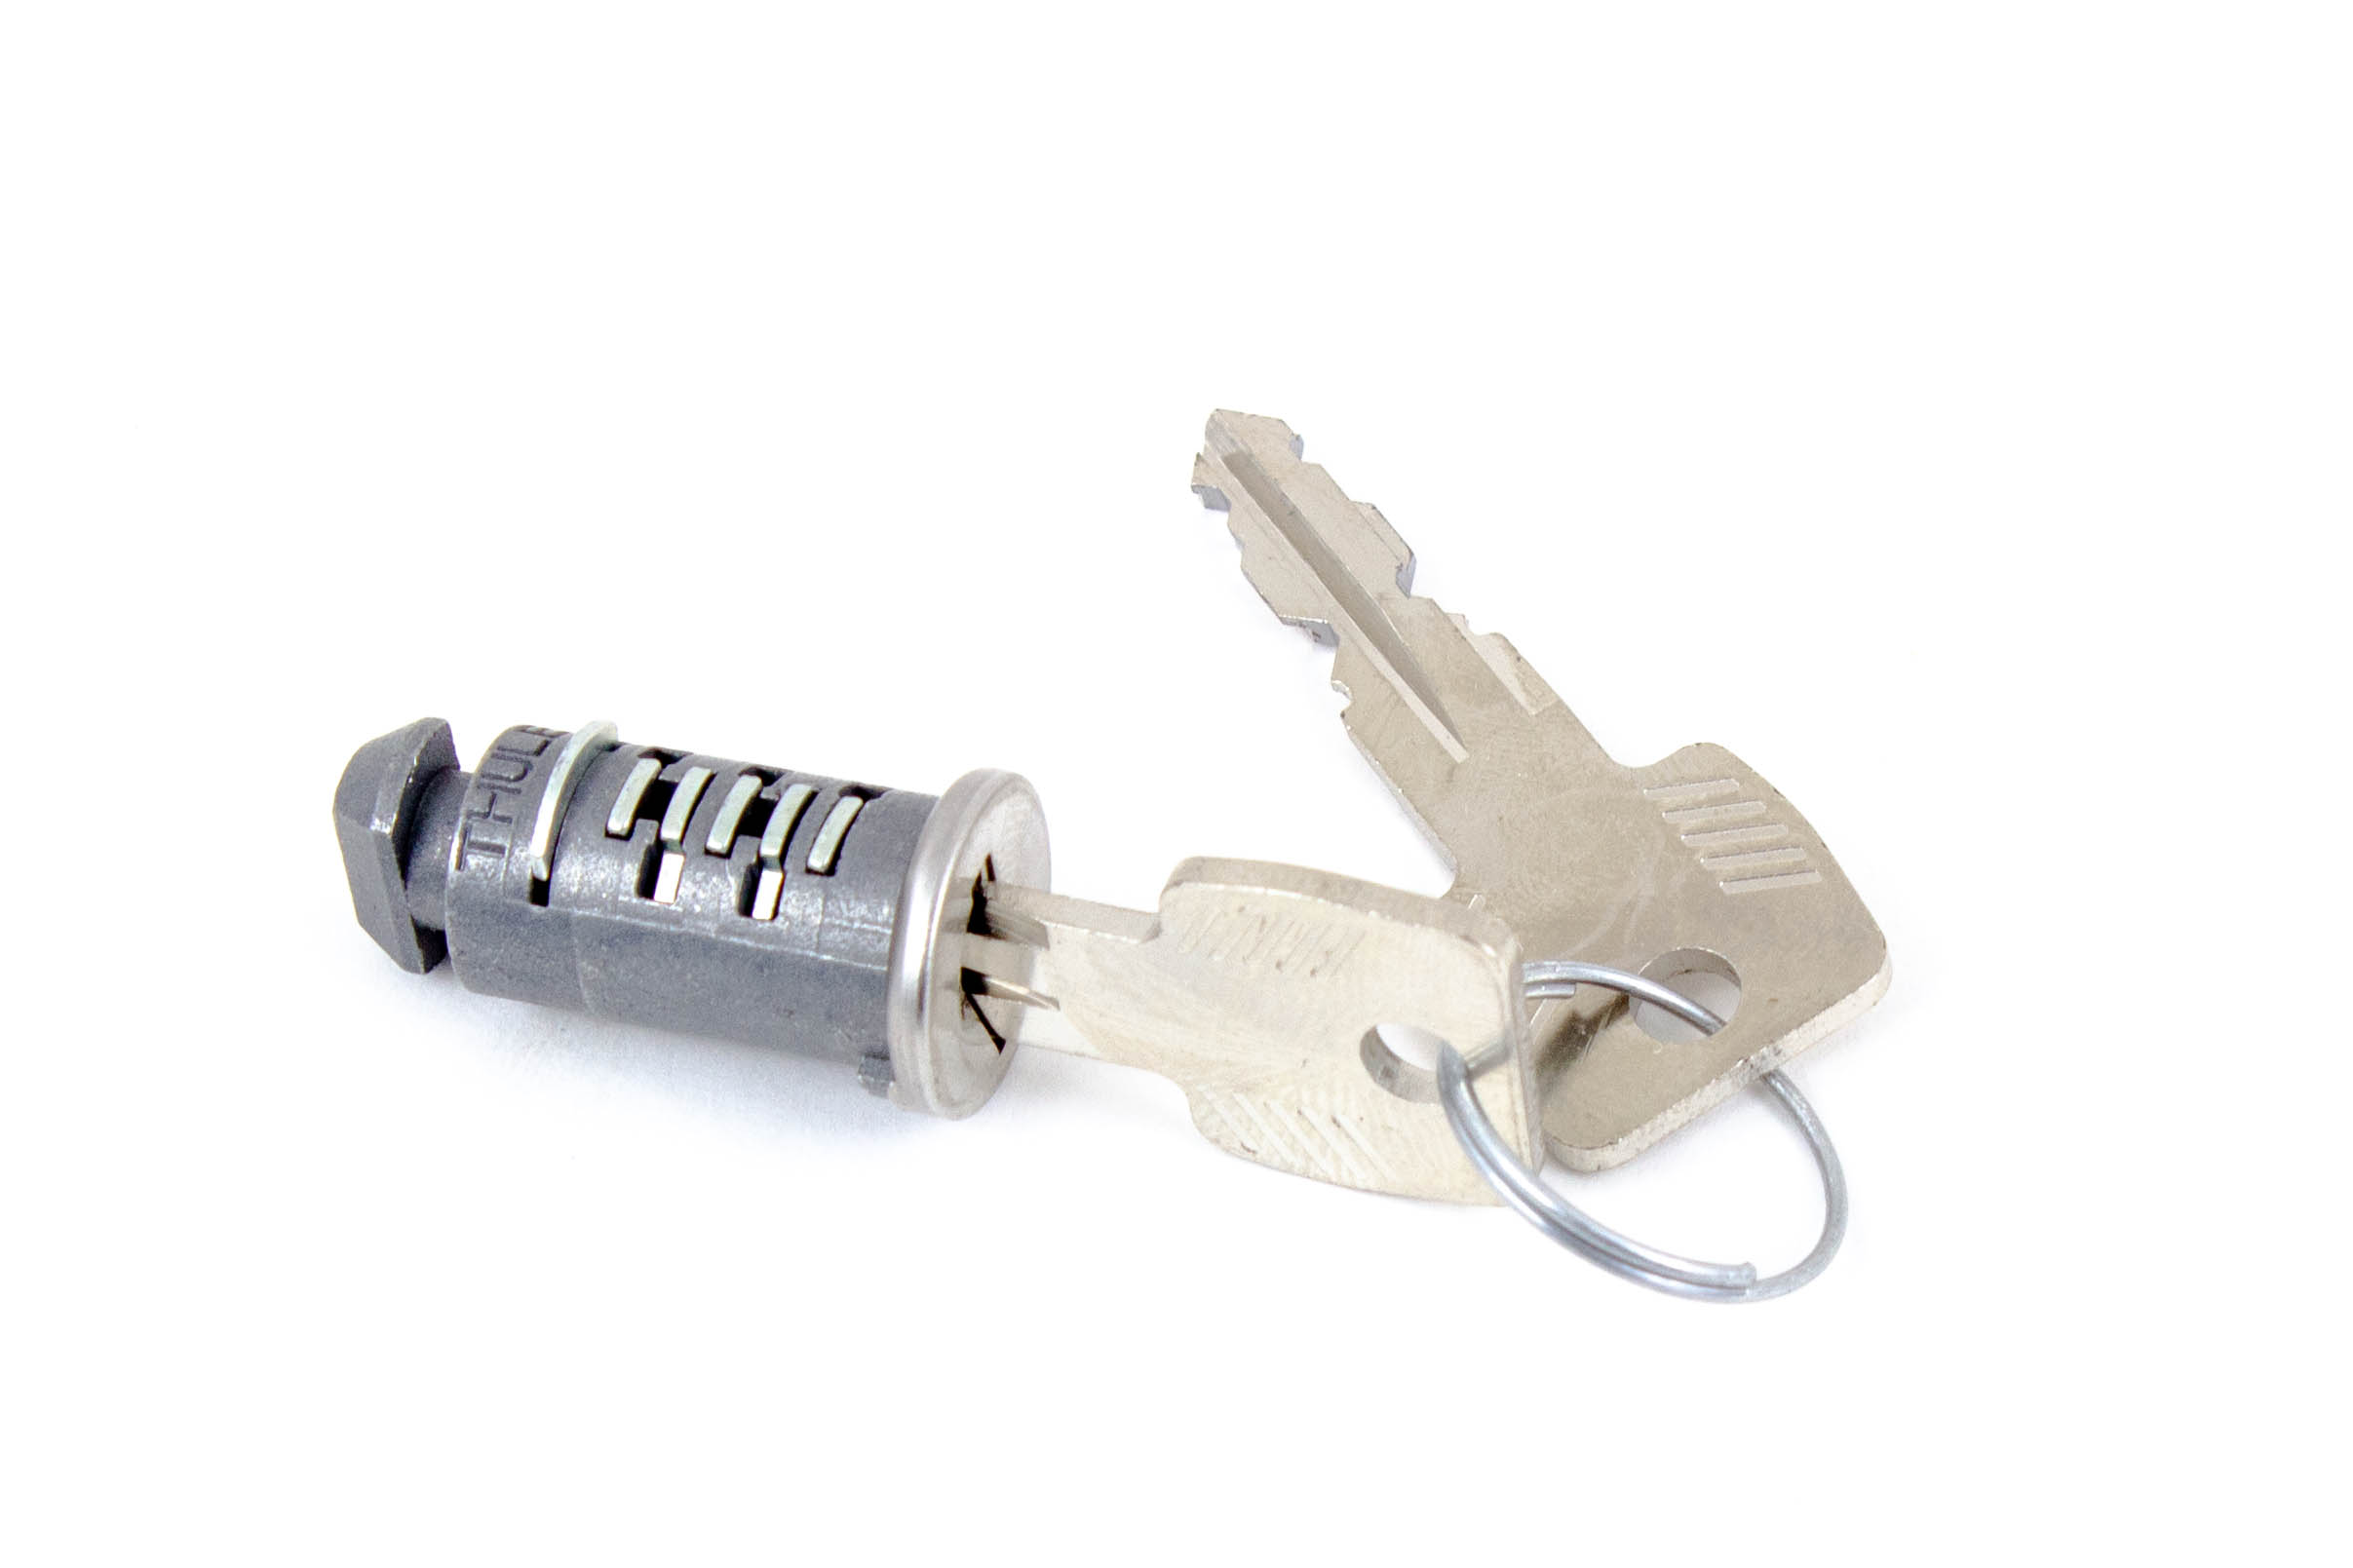 Thule 544 N006 Lock Cylinders 4 cylinder locks with 4 keys and installation key 